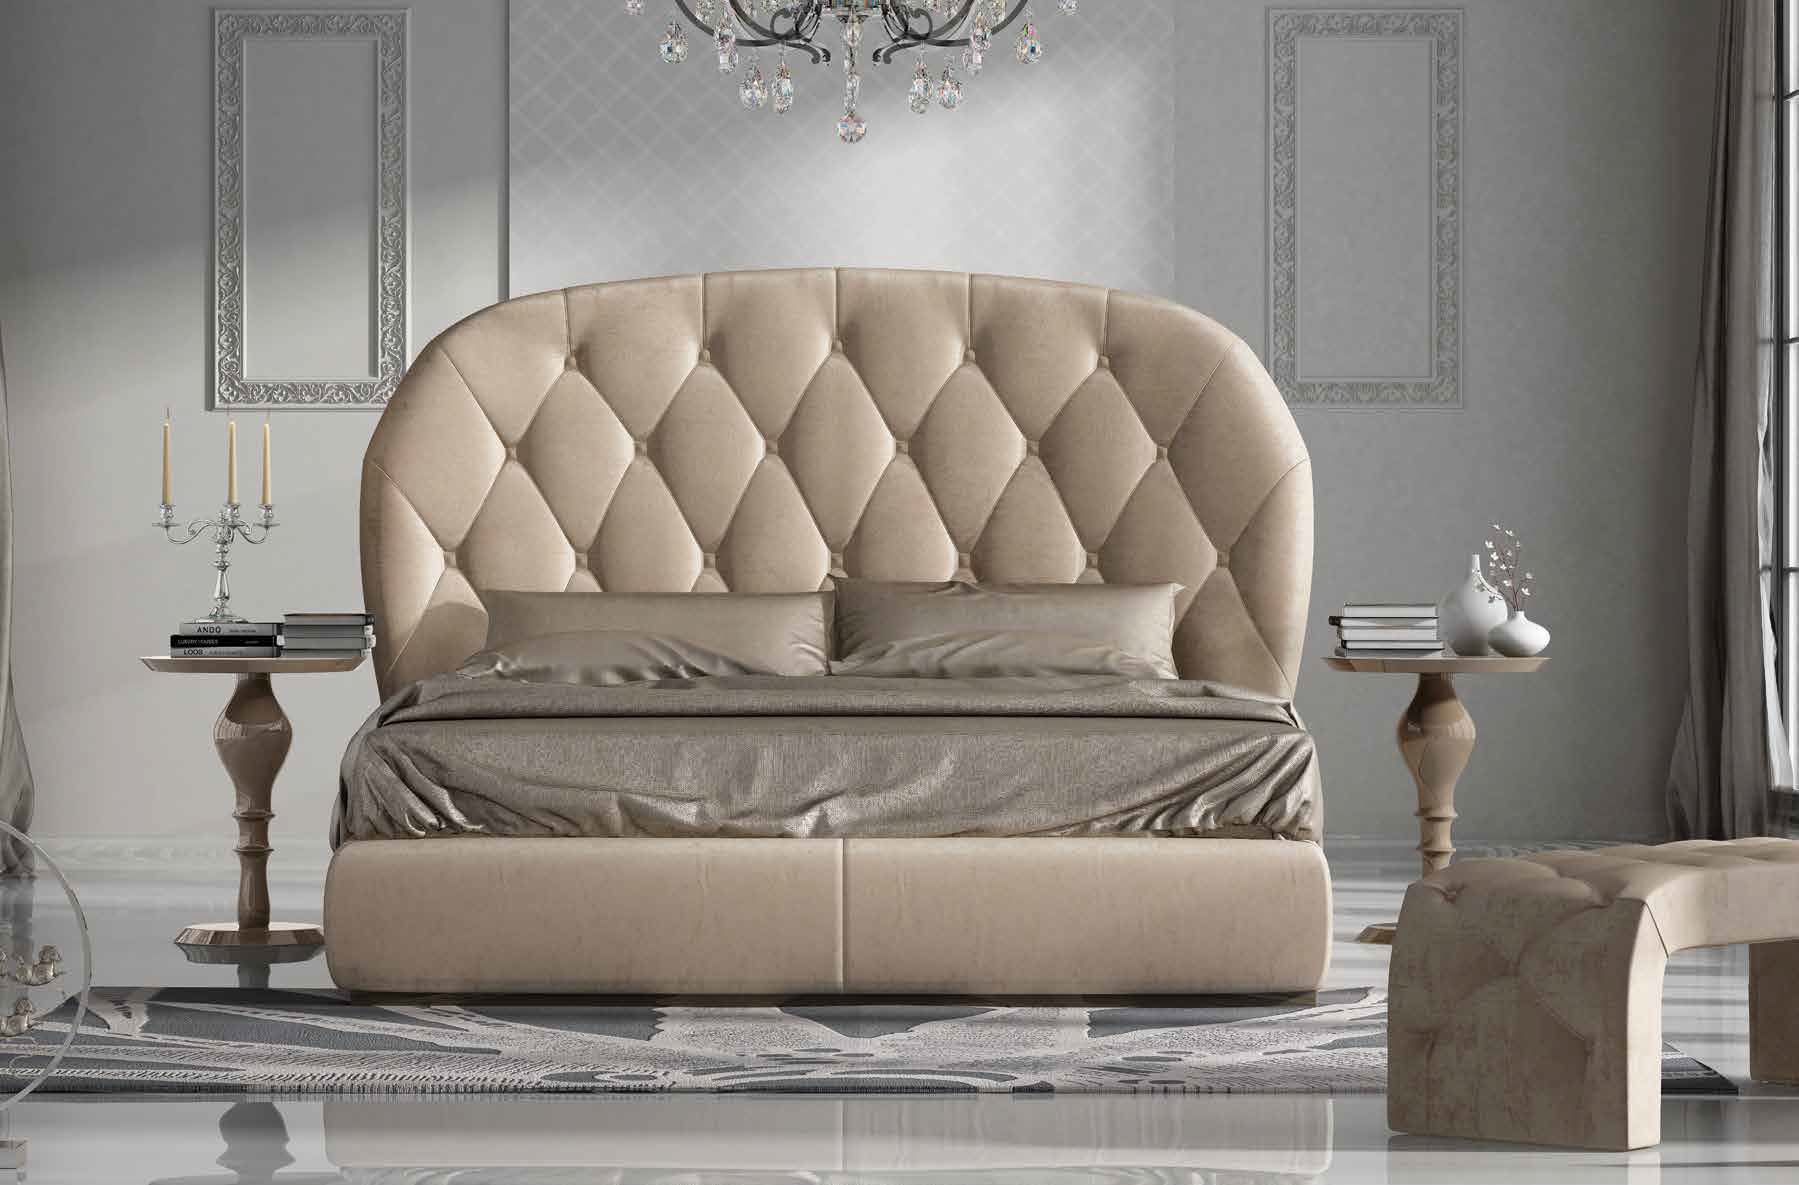 Brands Franco Furniture Bedrooms vol2, Spain DOR 77